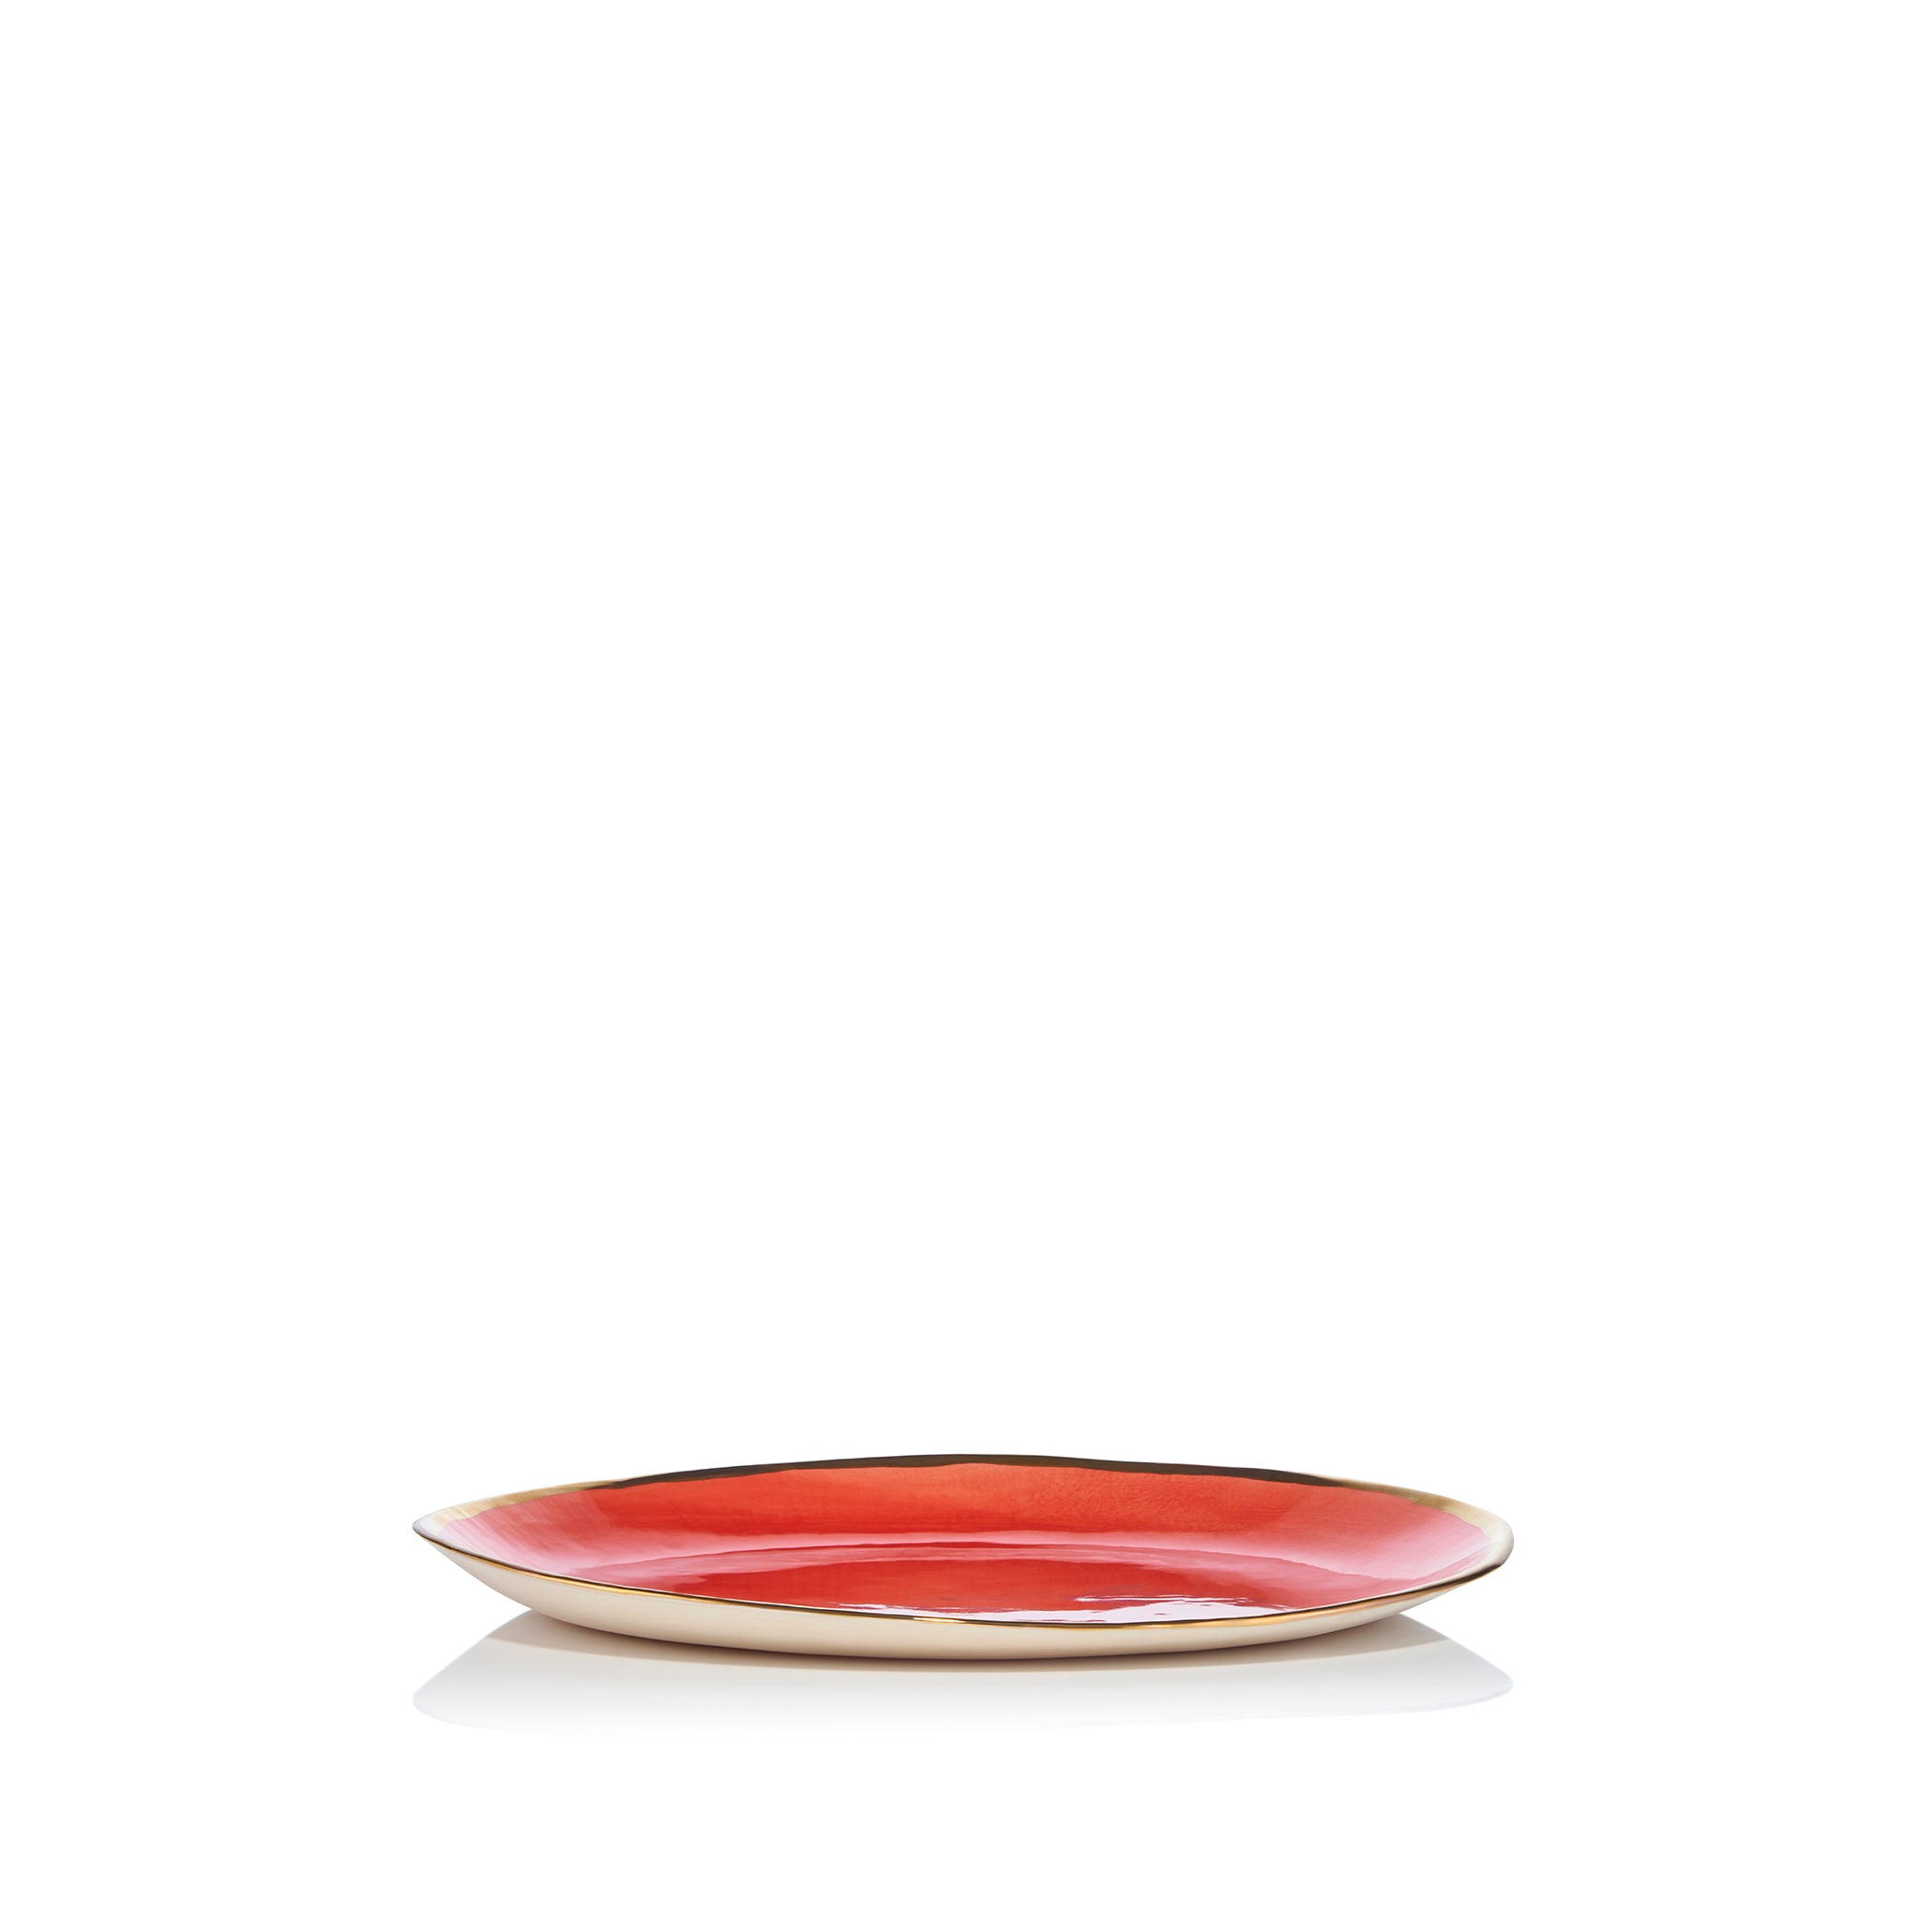 Handmade 27cm Red Ceramic Dinner Plate with 24 Carat Gold Rim